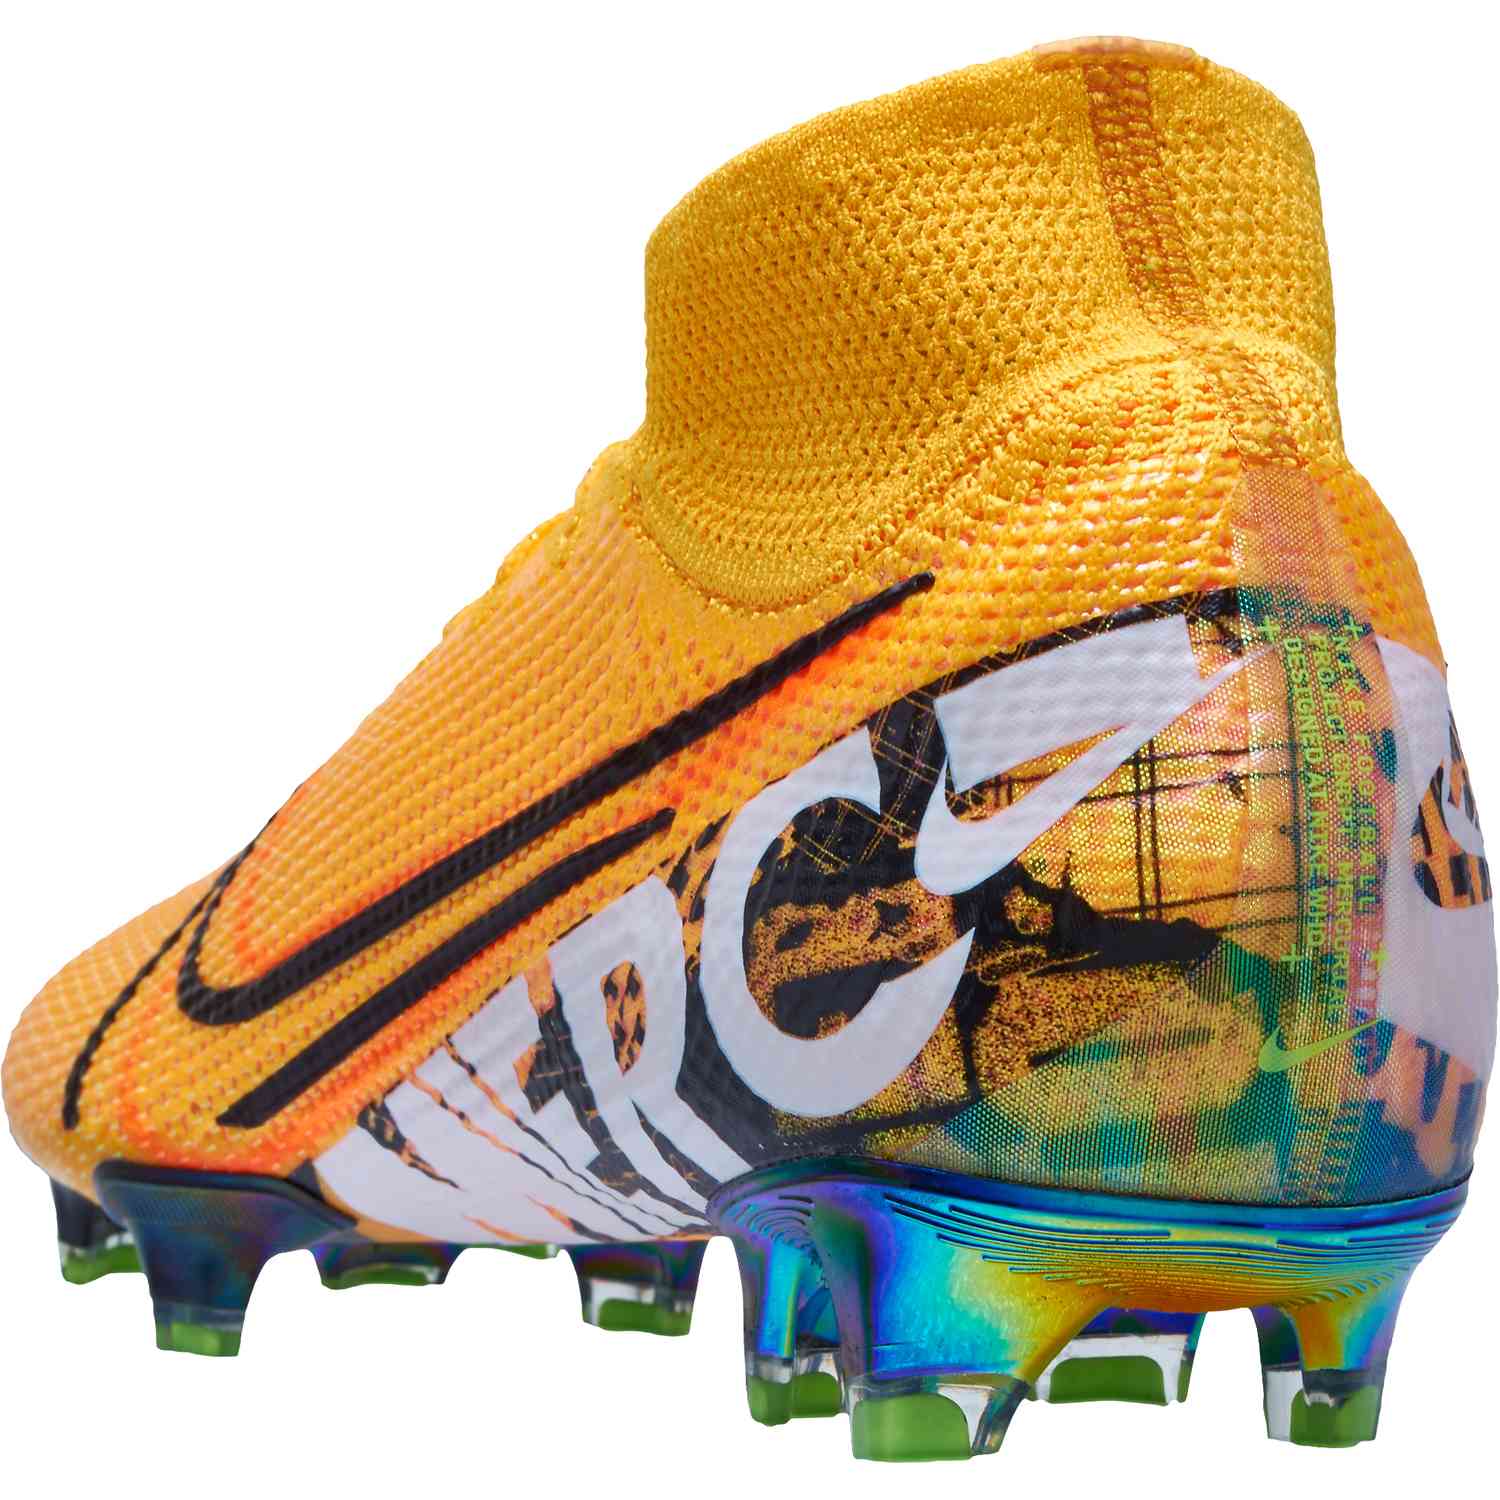 soccerbible boots nike mercurial vapor superfly safari iii fg cr7